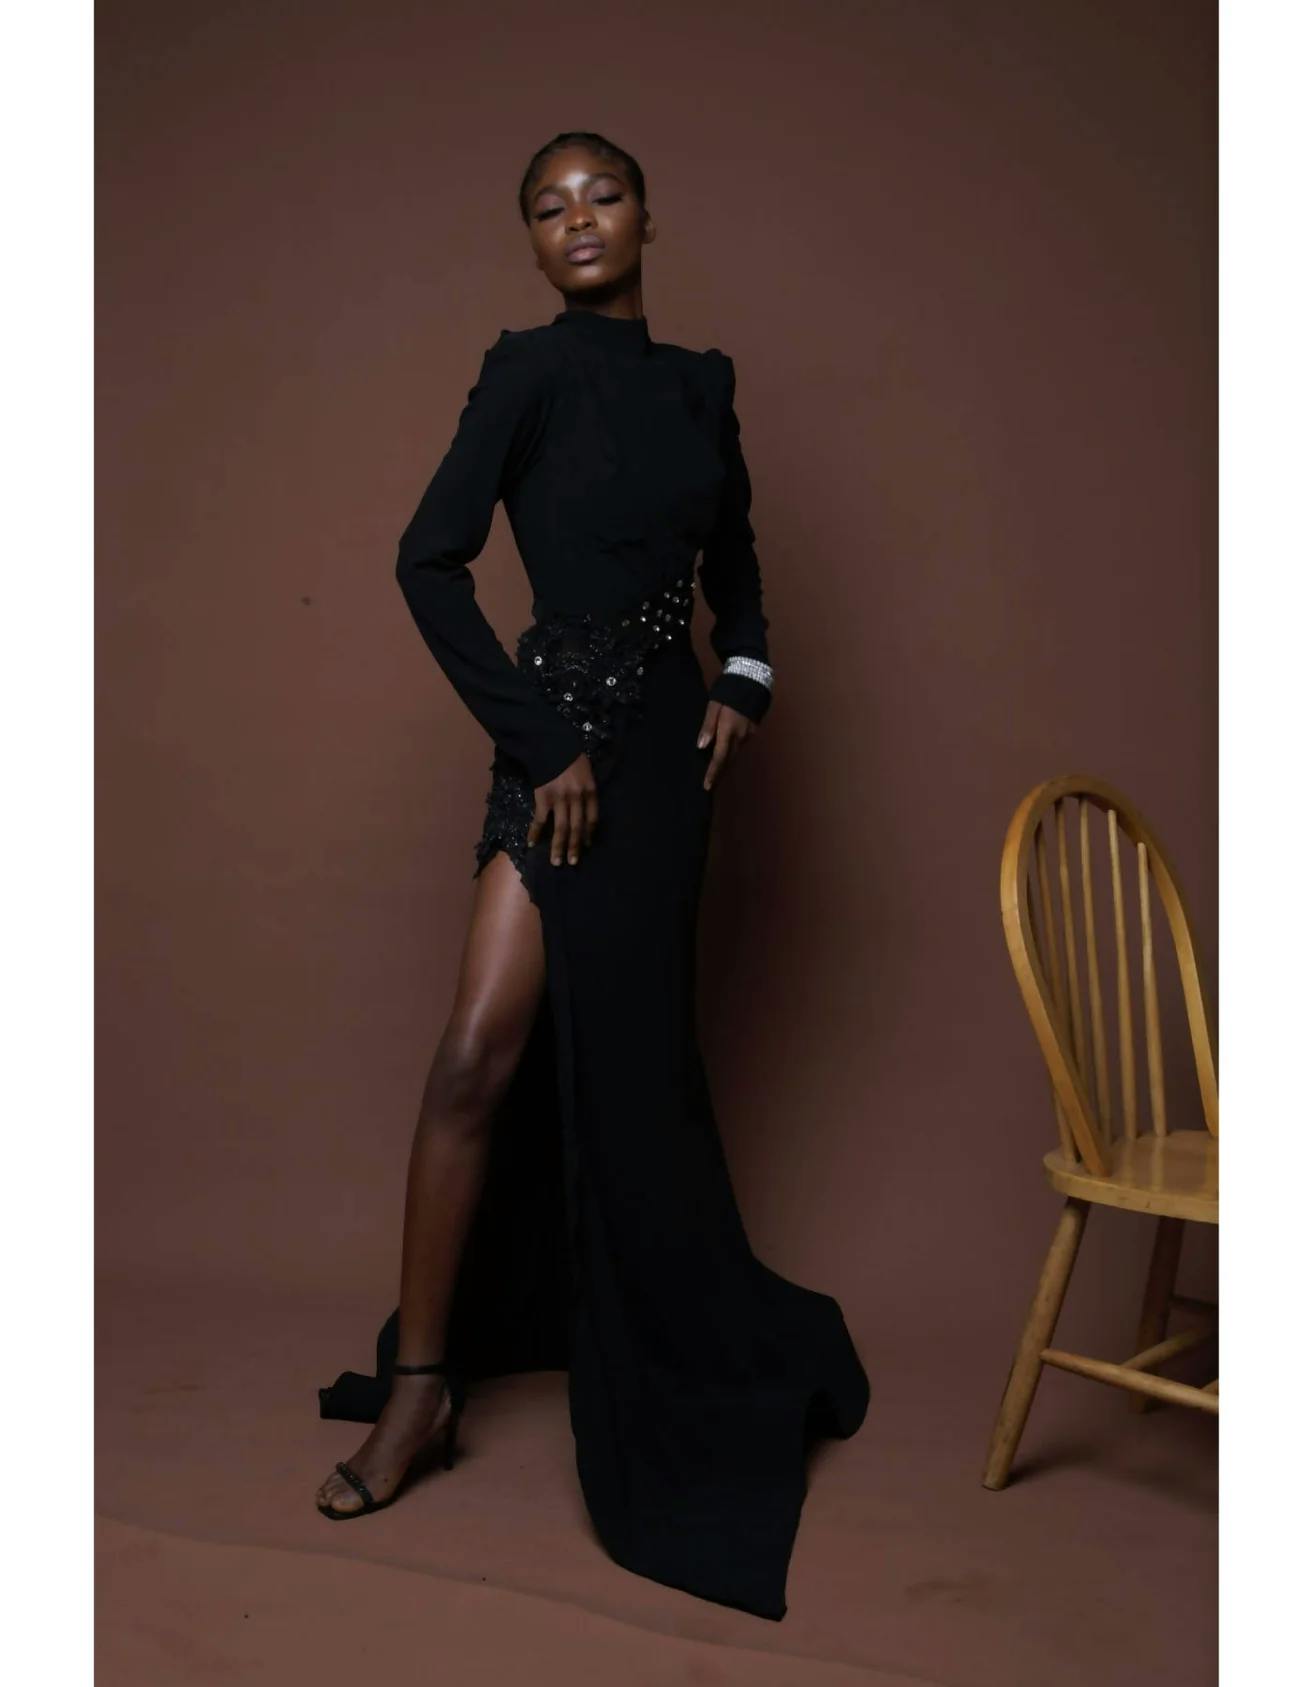 Black Embellished Side Slit Dress, a product by Joseph Ejiro